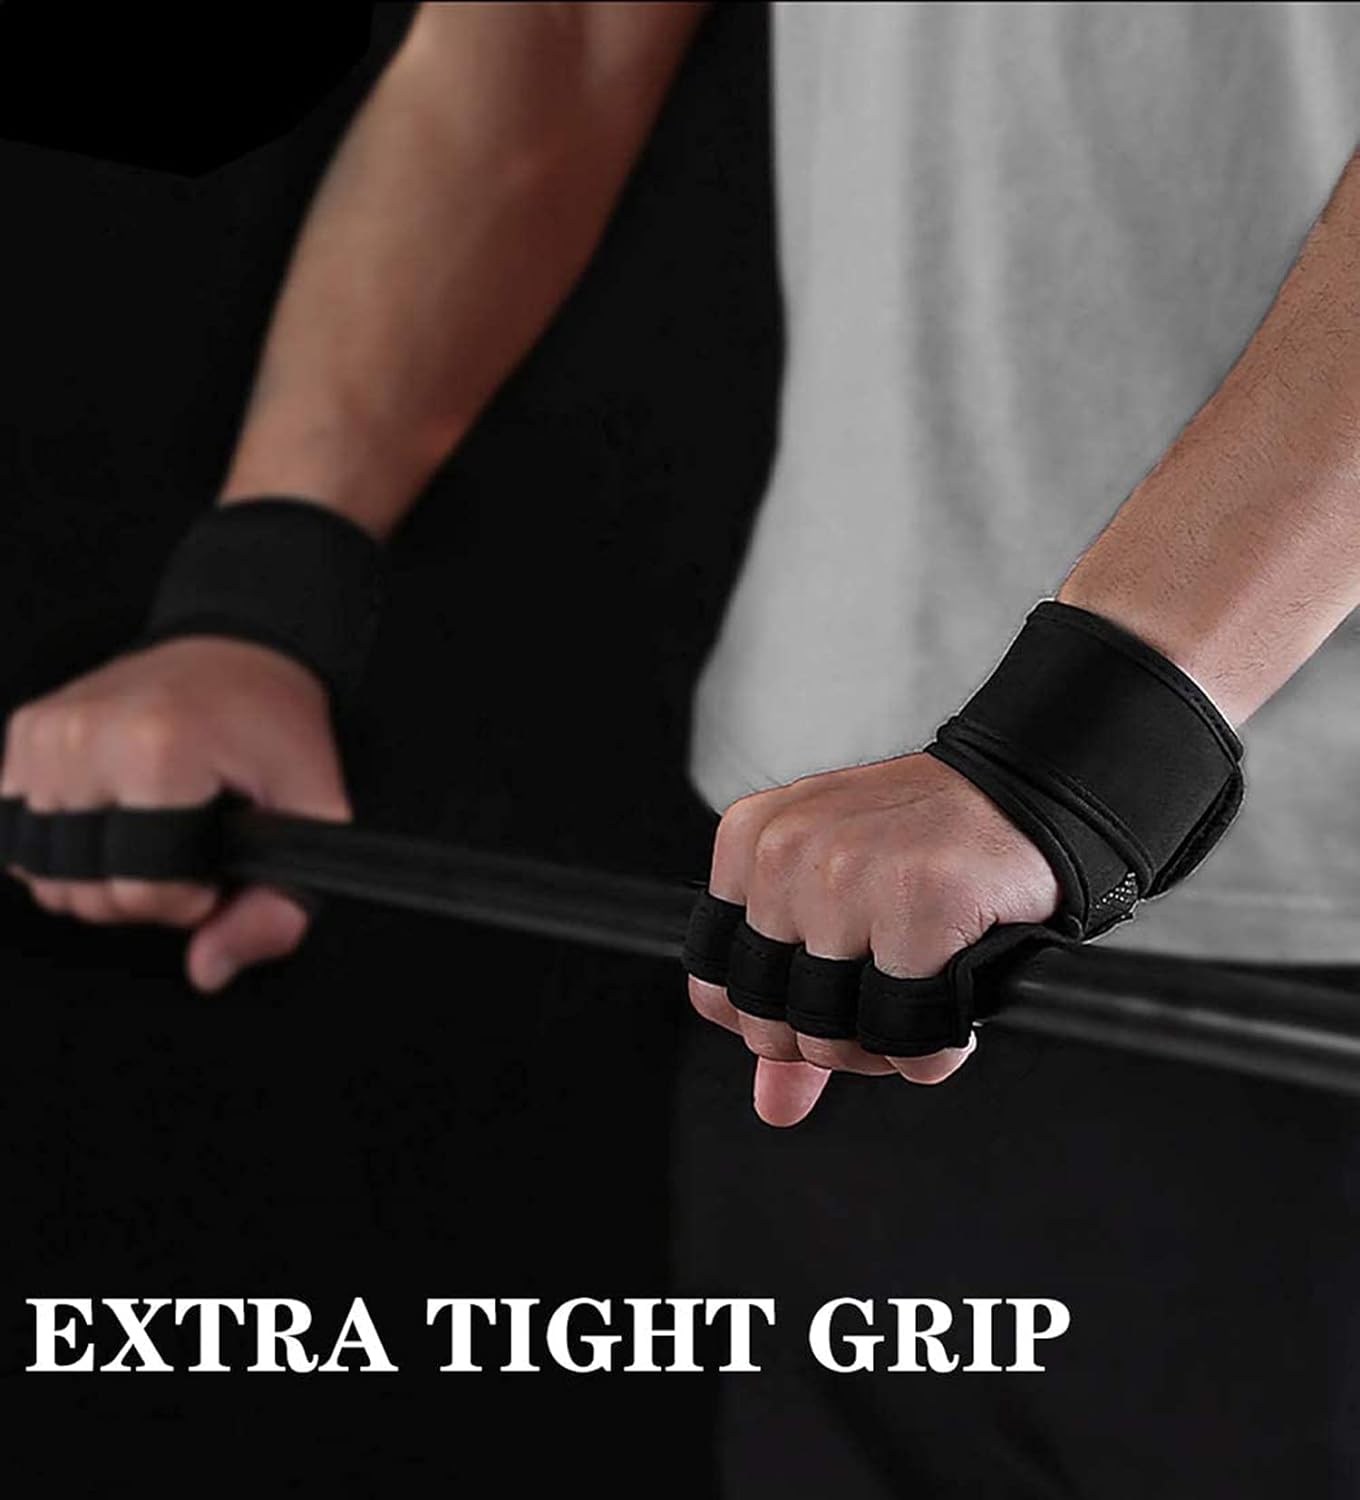 Weightlifting Gym Gloves